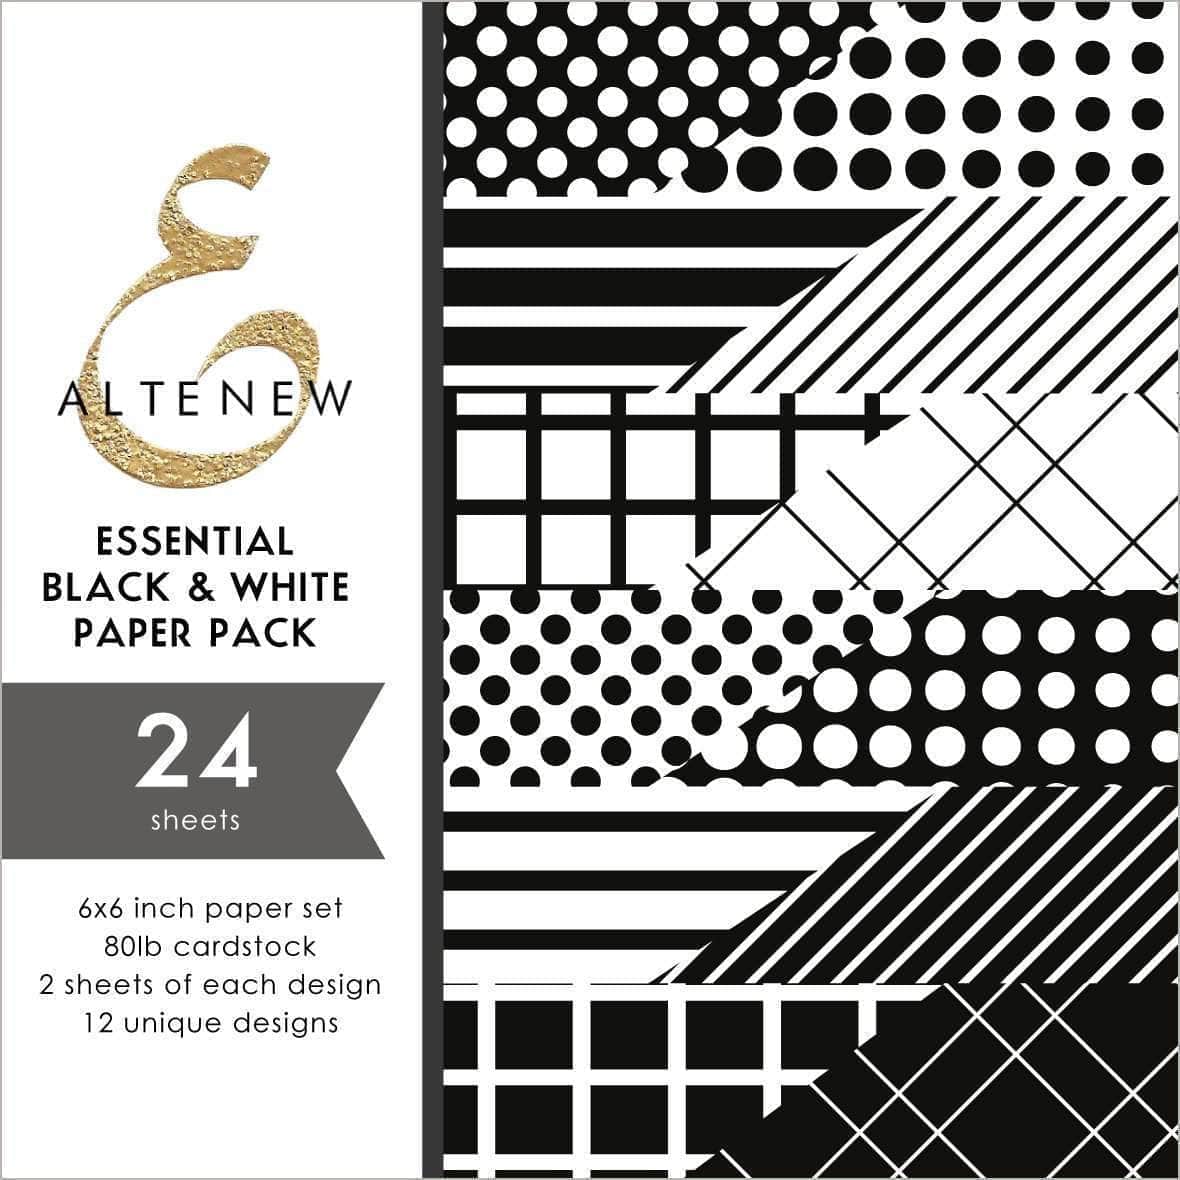 Altenew Essential Black & White 6x6 Paper Pack